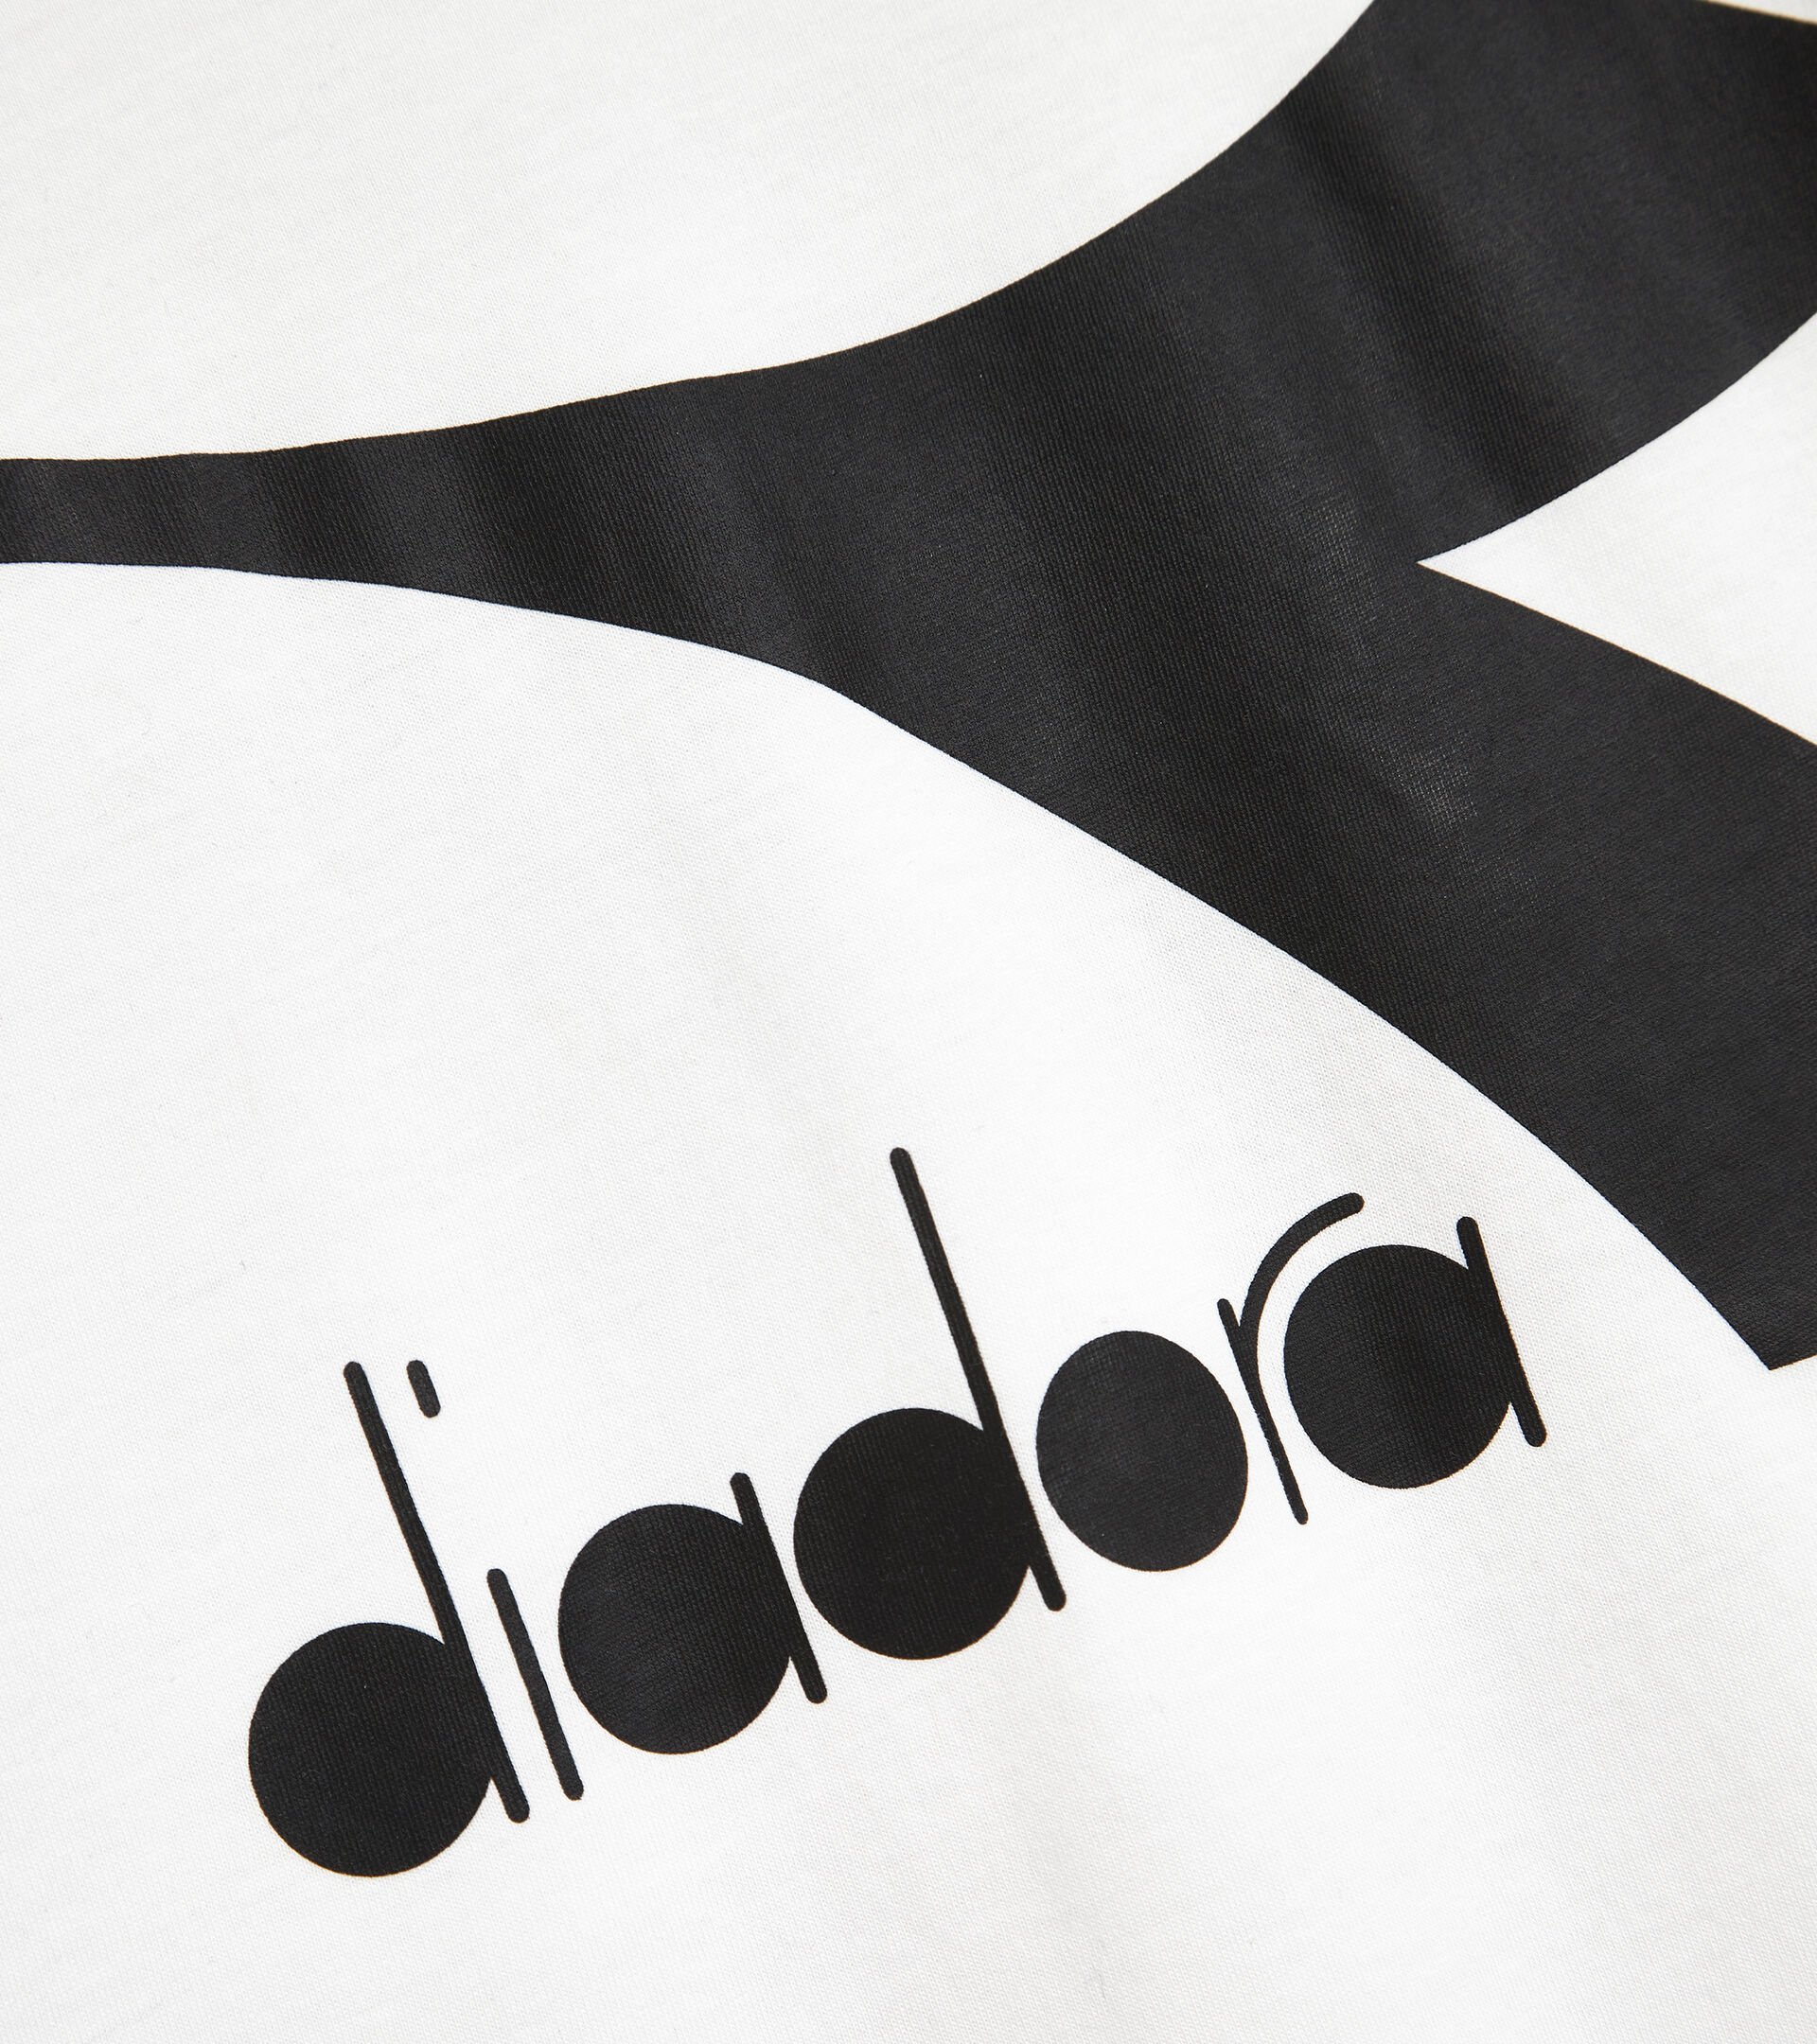 Cotton T-shirt - Men T-SHIRT SS CHROMIA OPTICAL WHITE - Diadora